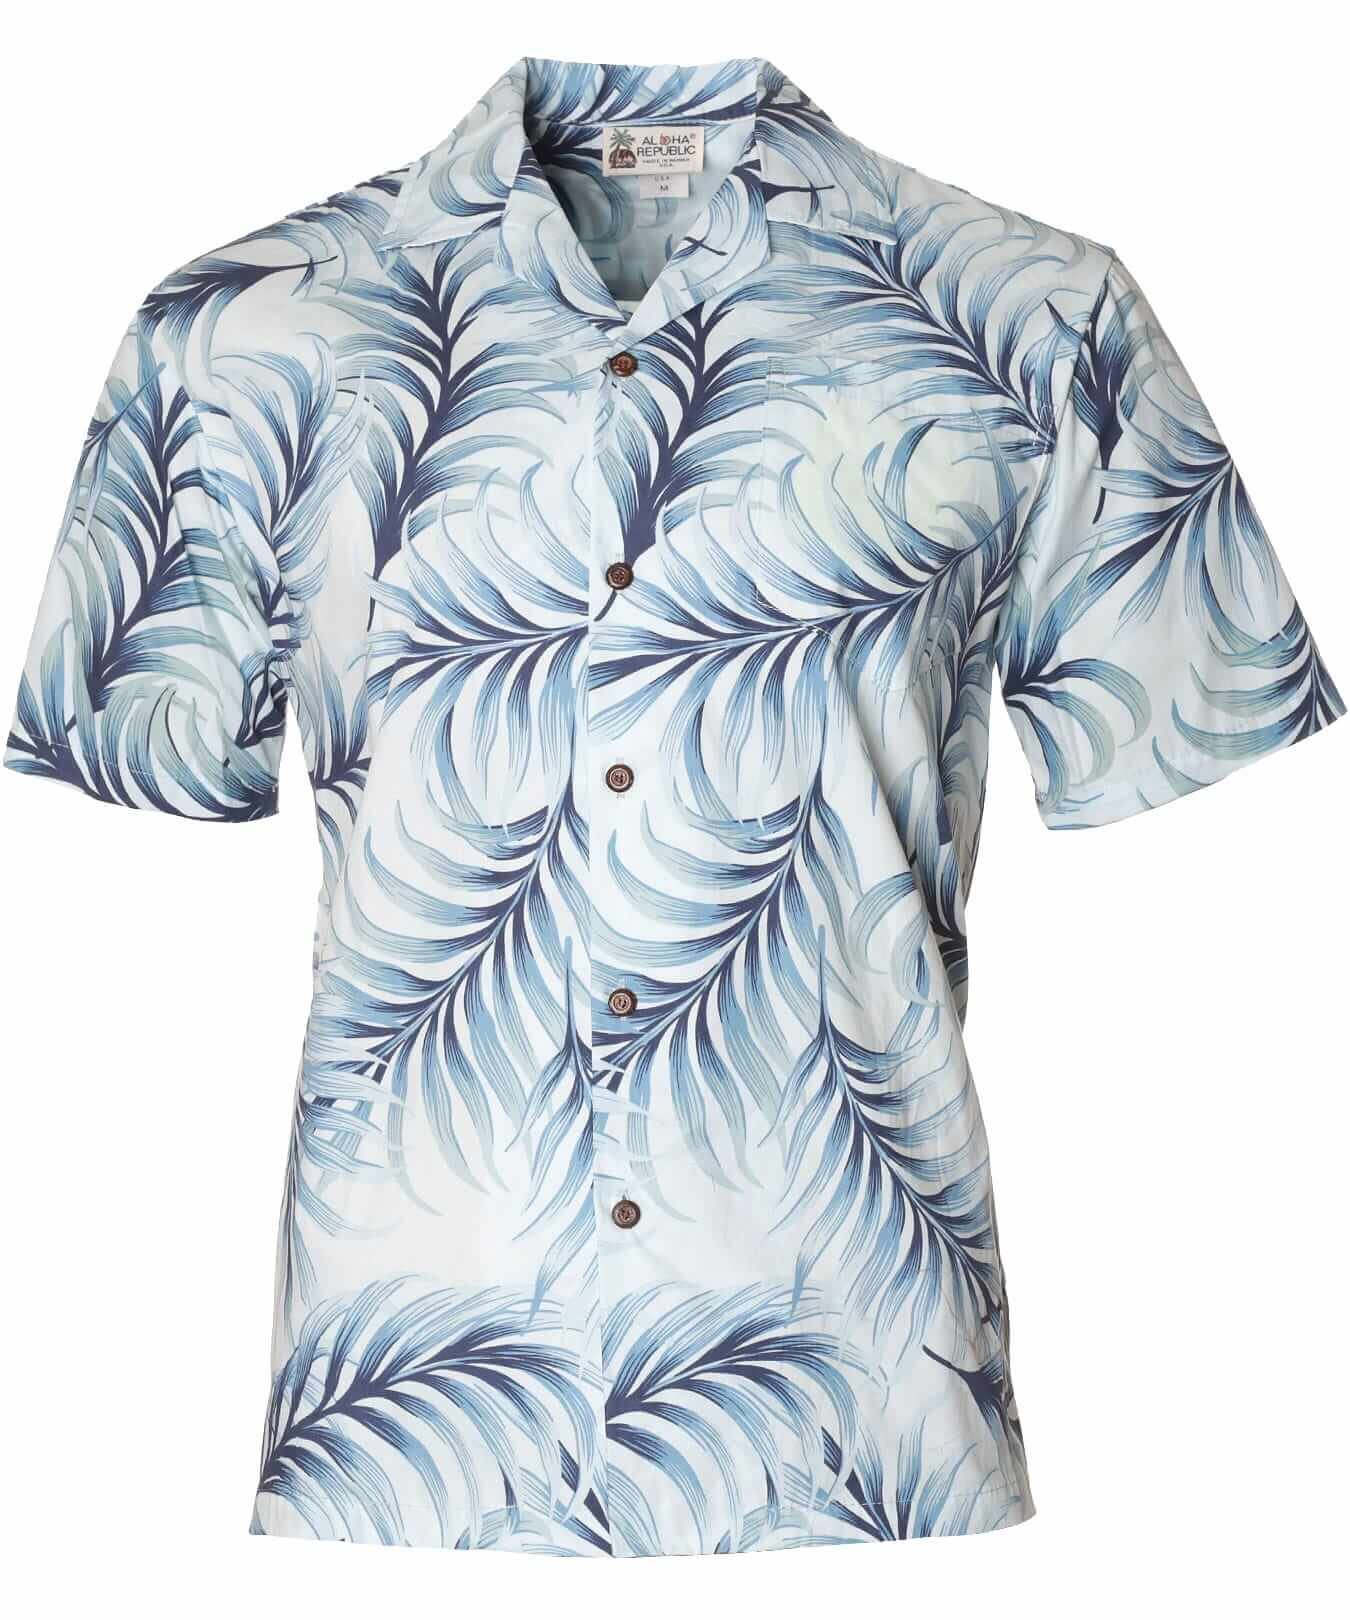 Koko Head Men's Aloha Shirt Blue